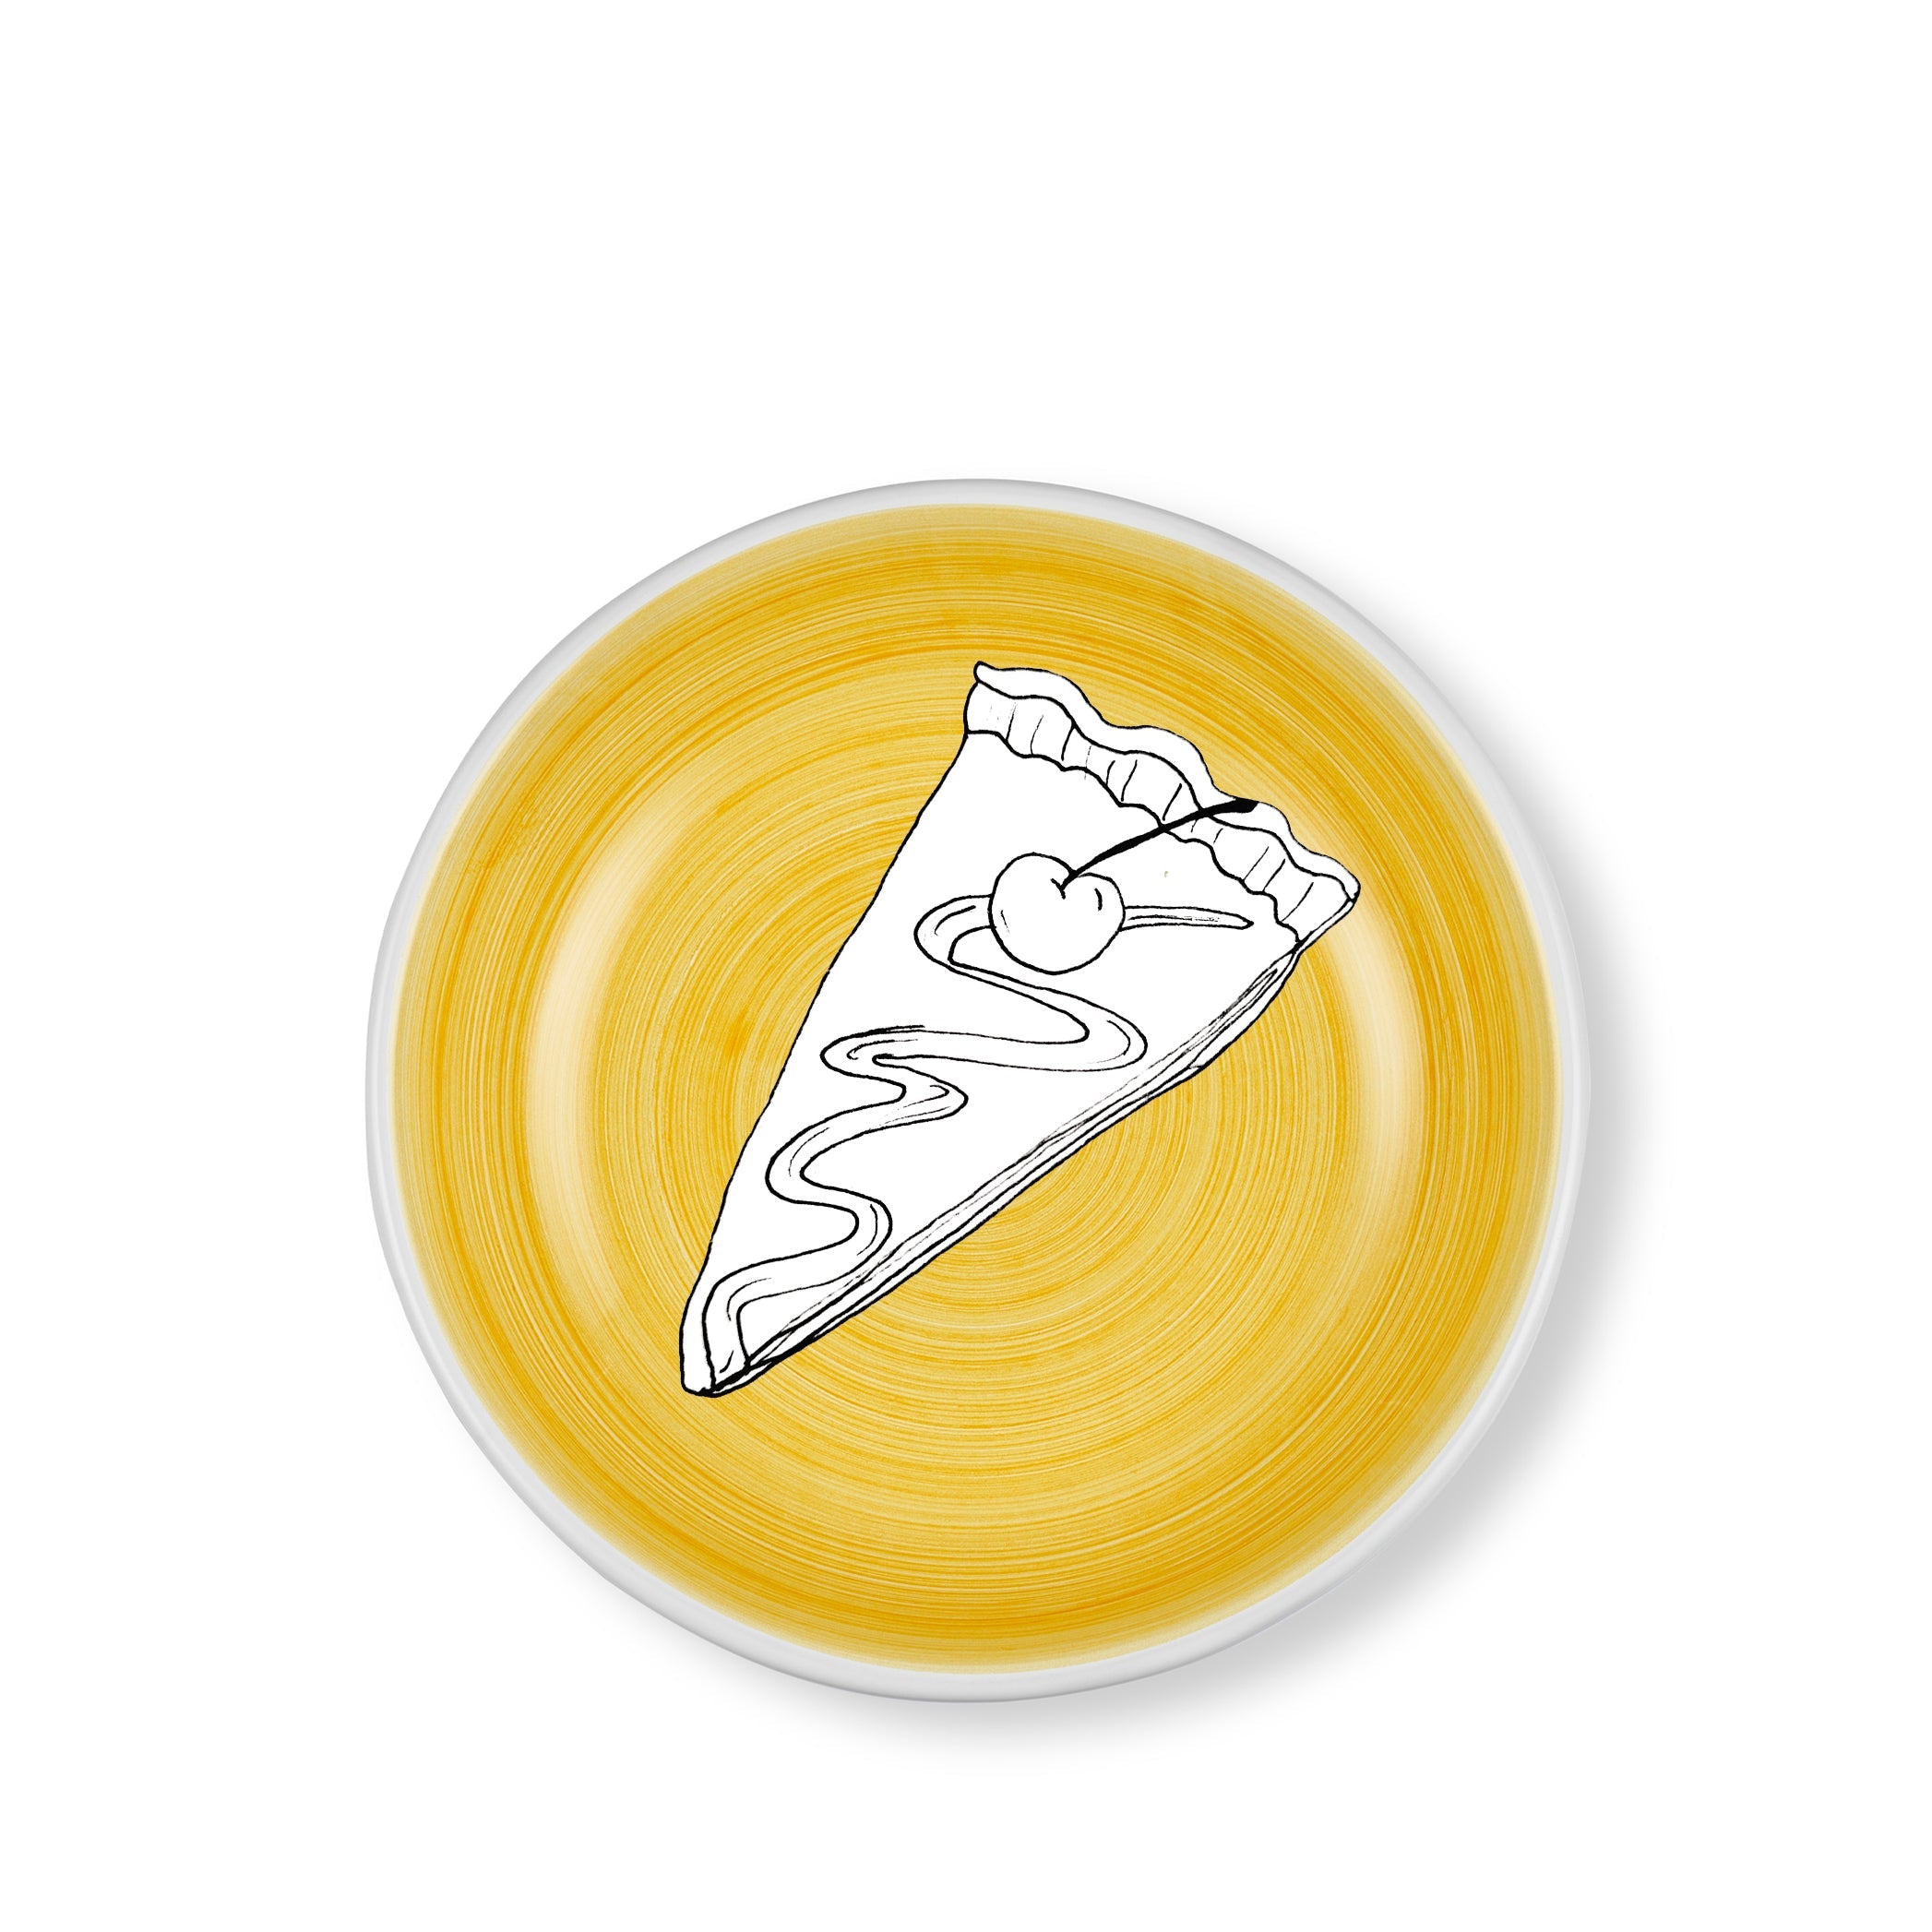 S&B 'Brushed' Ceramic Pasta Bowl in Yellow, 22cm